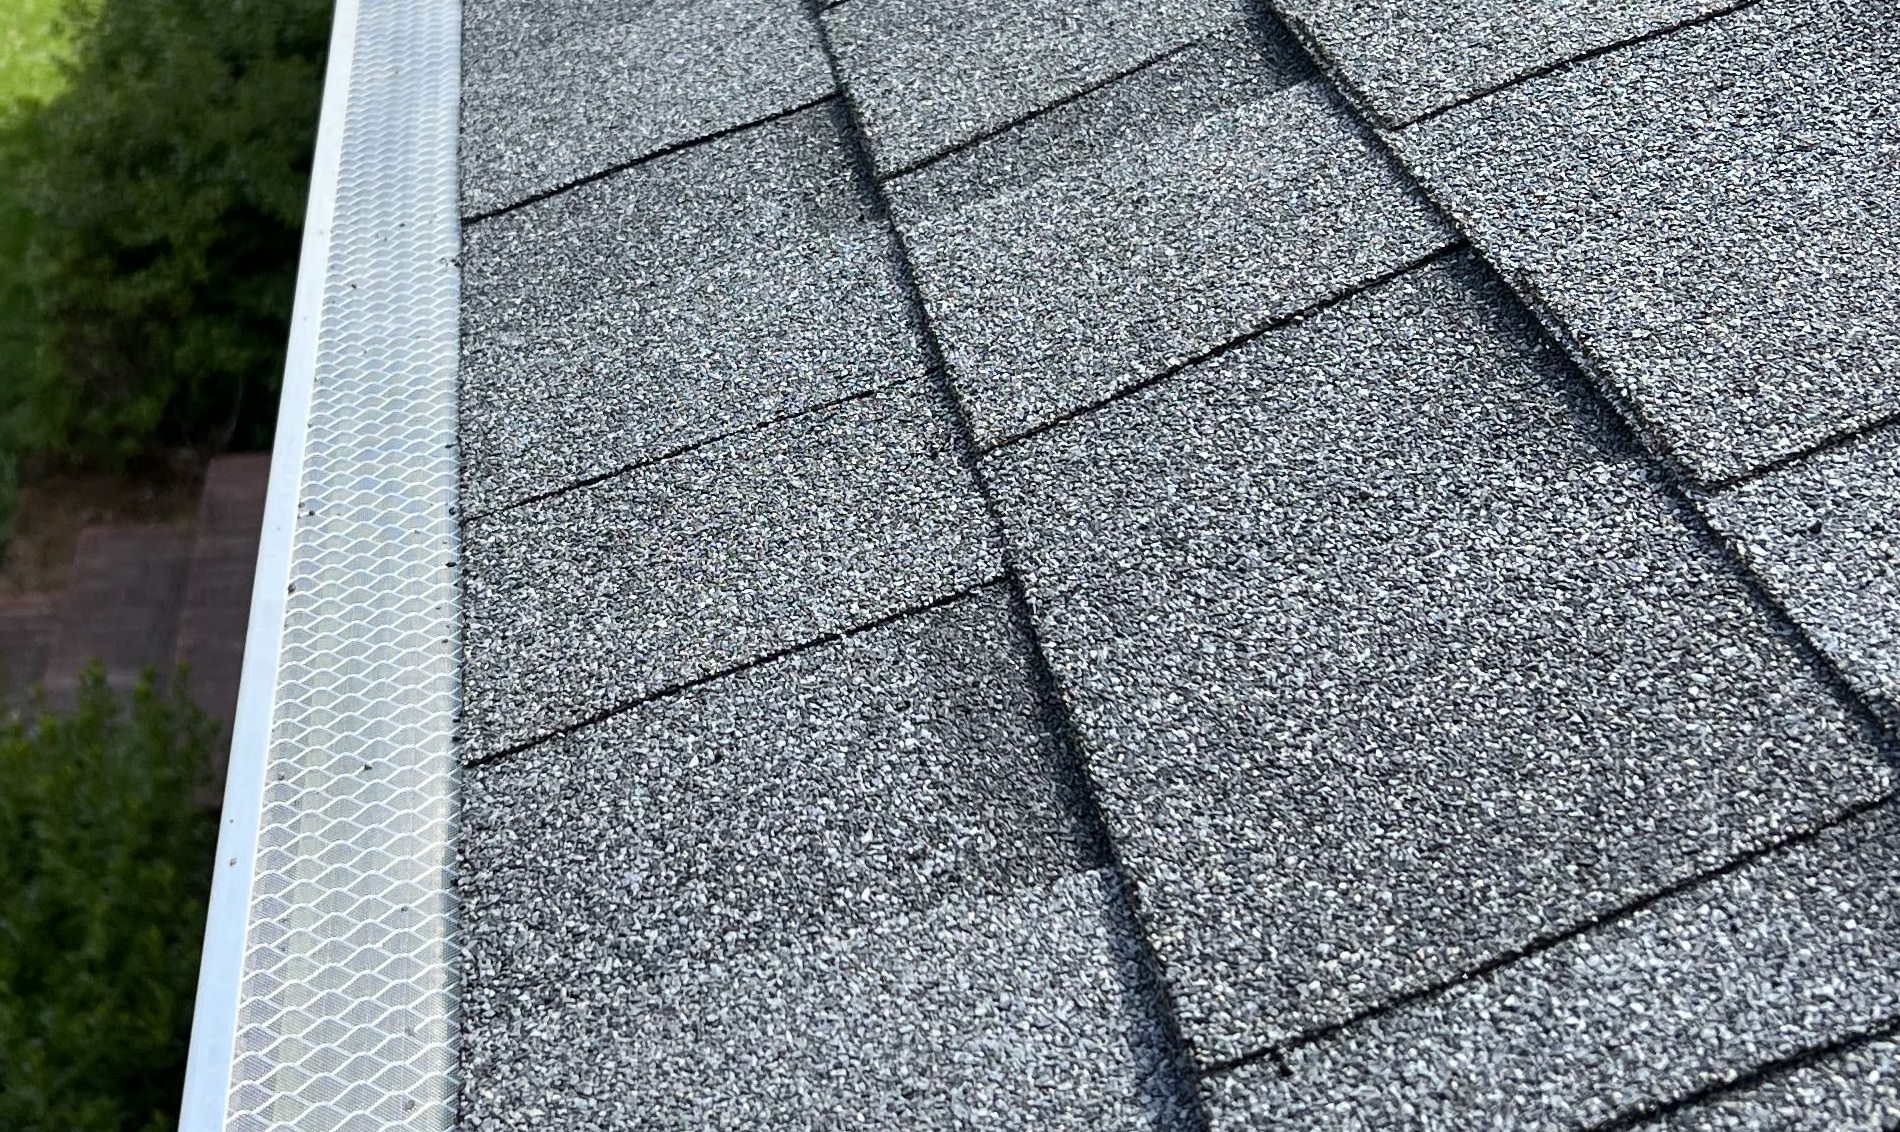 Roof shingles on a home